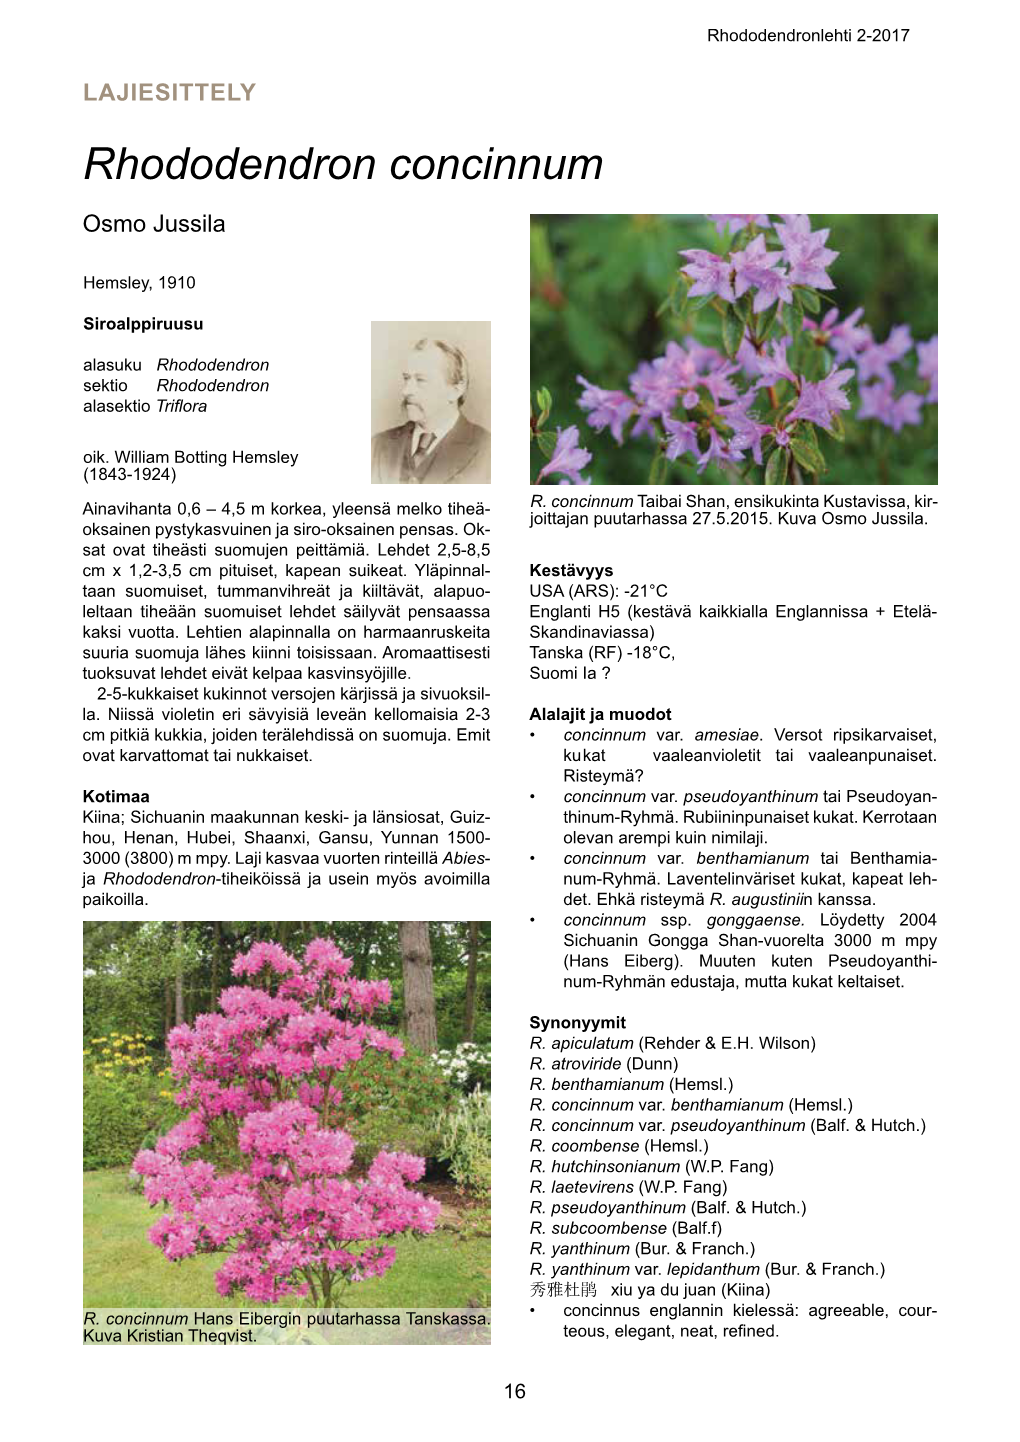 Rhododendron Concinnum Osmo Jussila